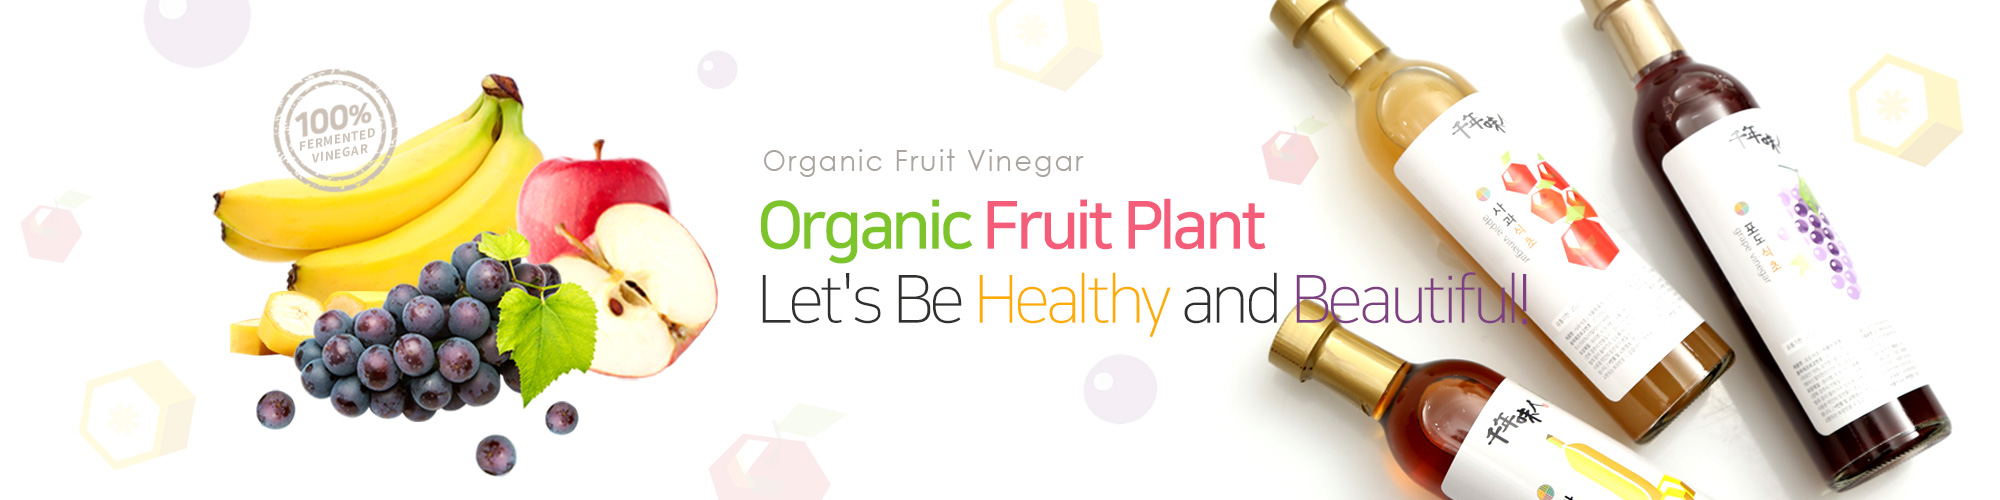 Organic fruit vinegar